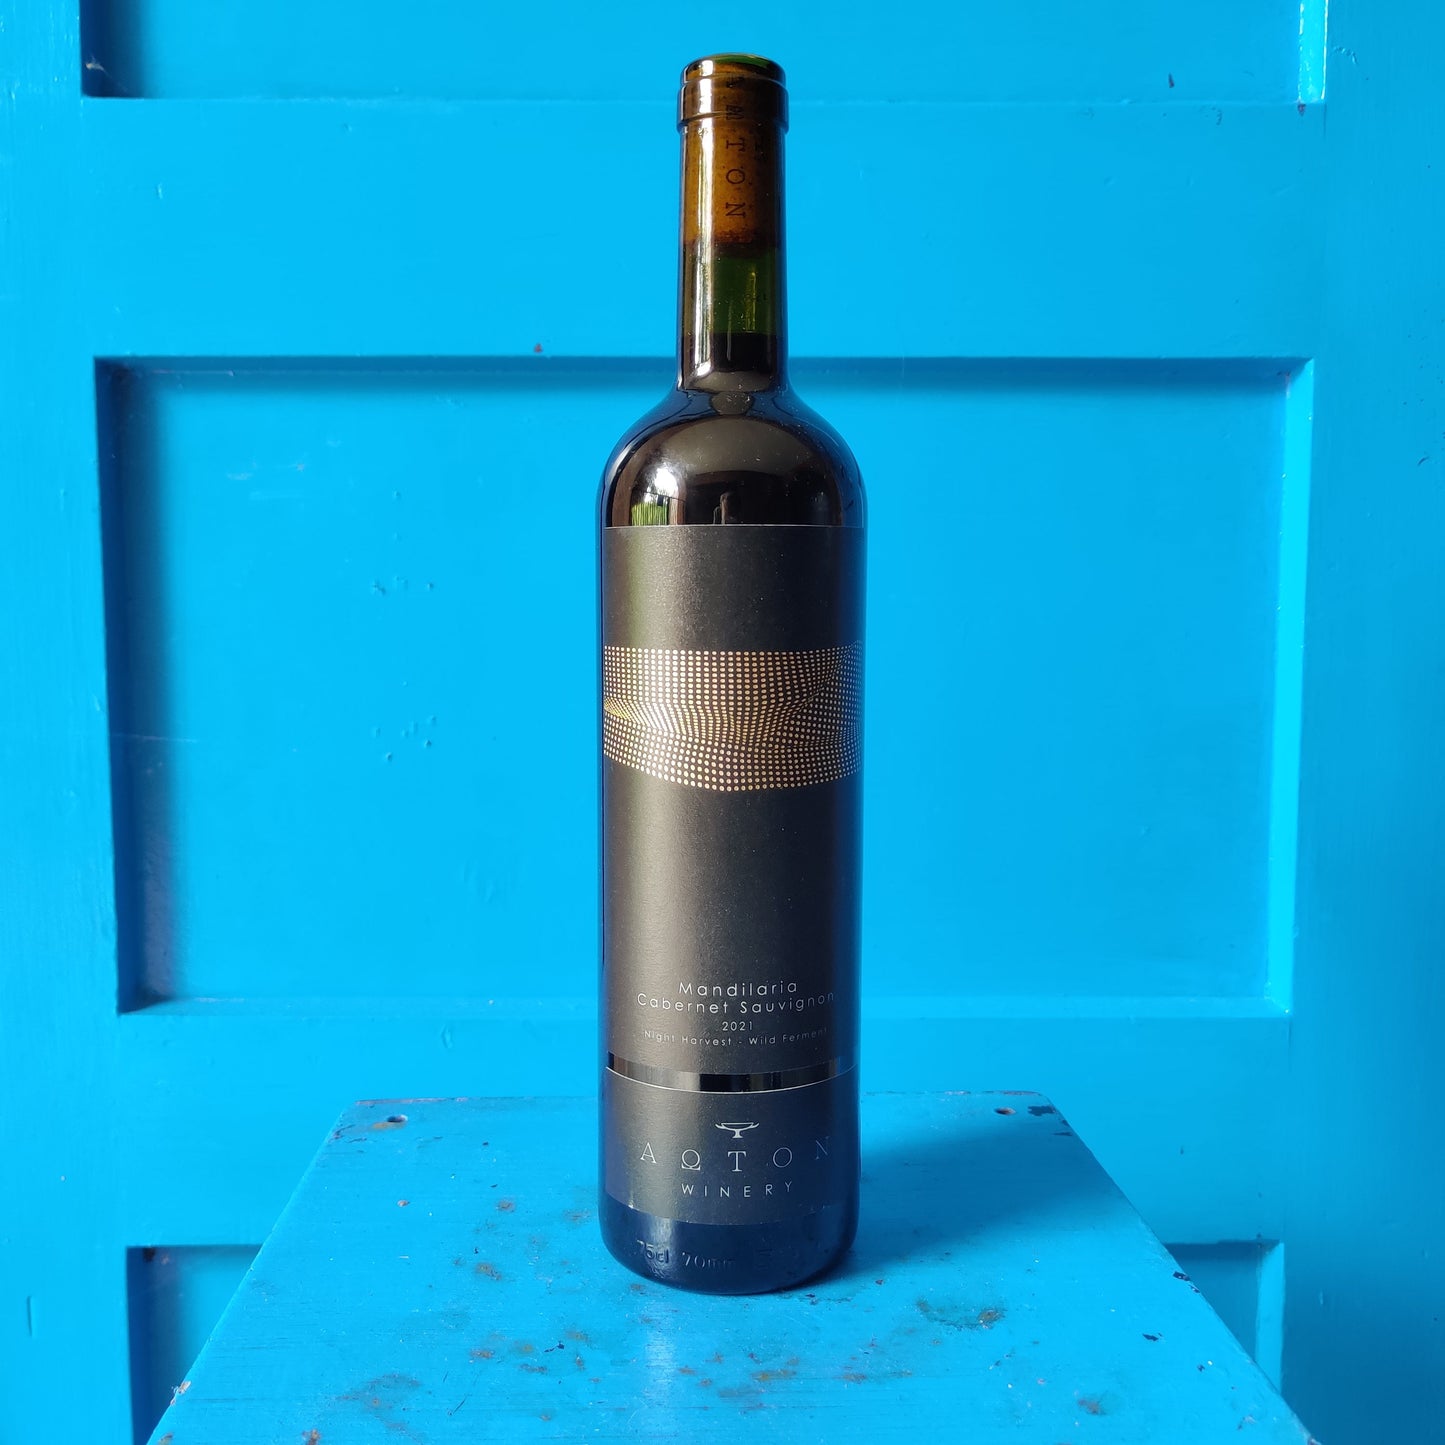 B2B Aoton Winery Mandilaria